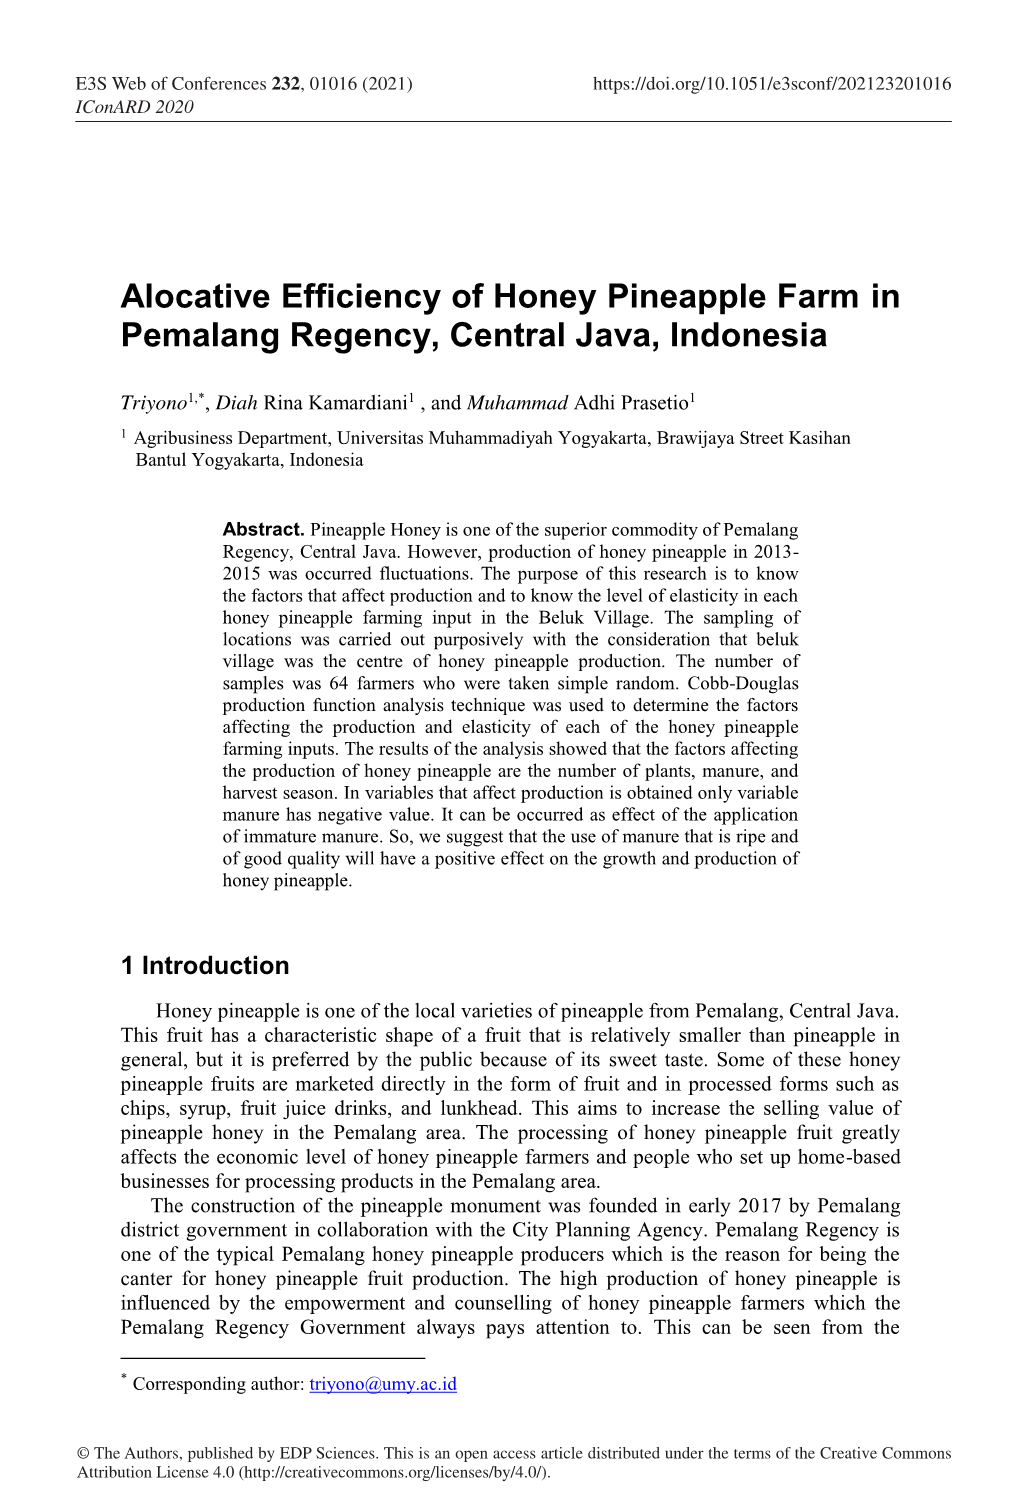 Alocative Efficiency of Honey Pineapple Farm in Pemalang Regency, Central Java, Indonesia